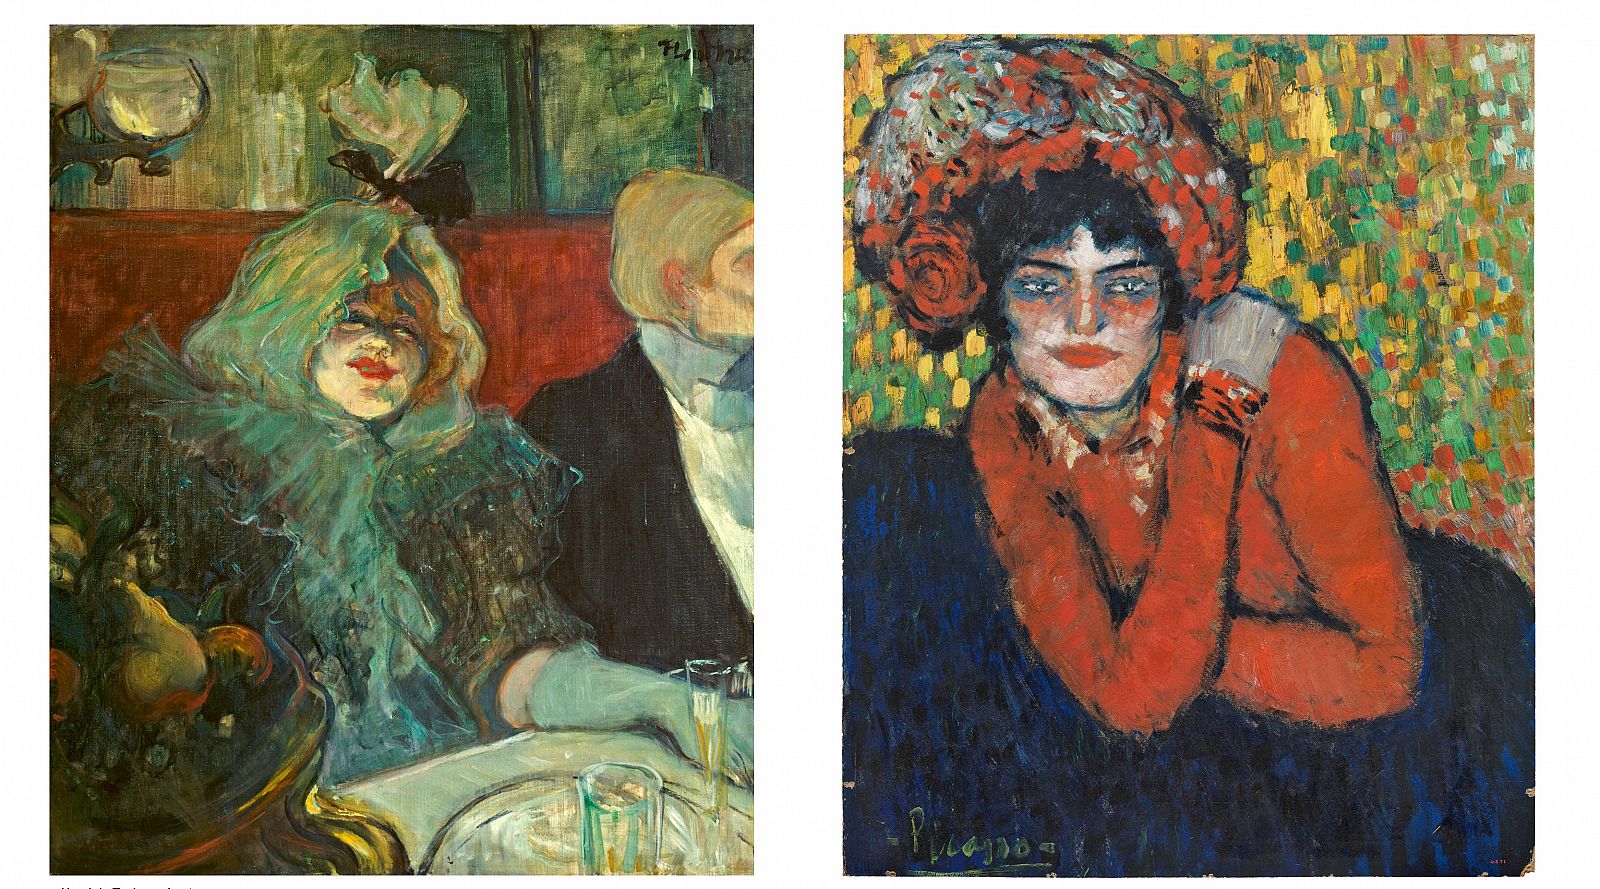 Izquierda: Toulouse-Lautrec. 'En un reservado' (1899),  The Courtauld Gallery, Londres. Derecha: Picasso. 'La espera (Margot)' (1901), Museu Picasso, Barcelona.